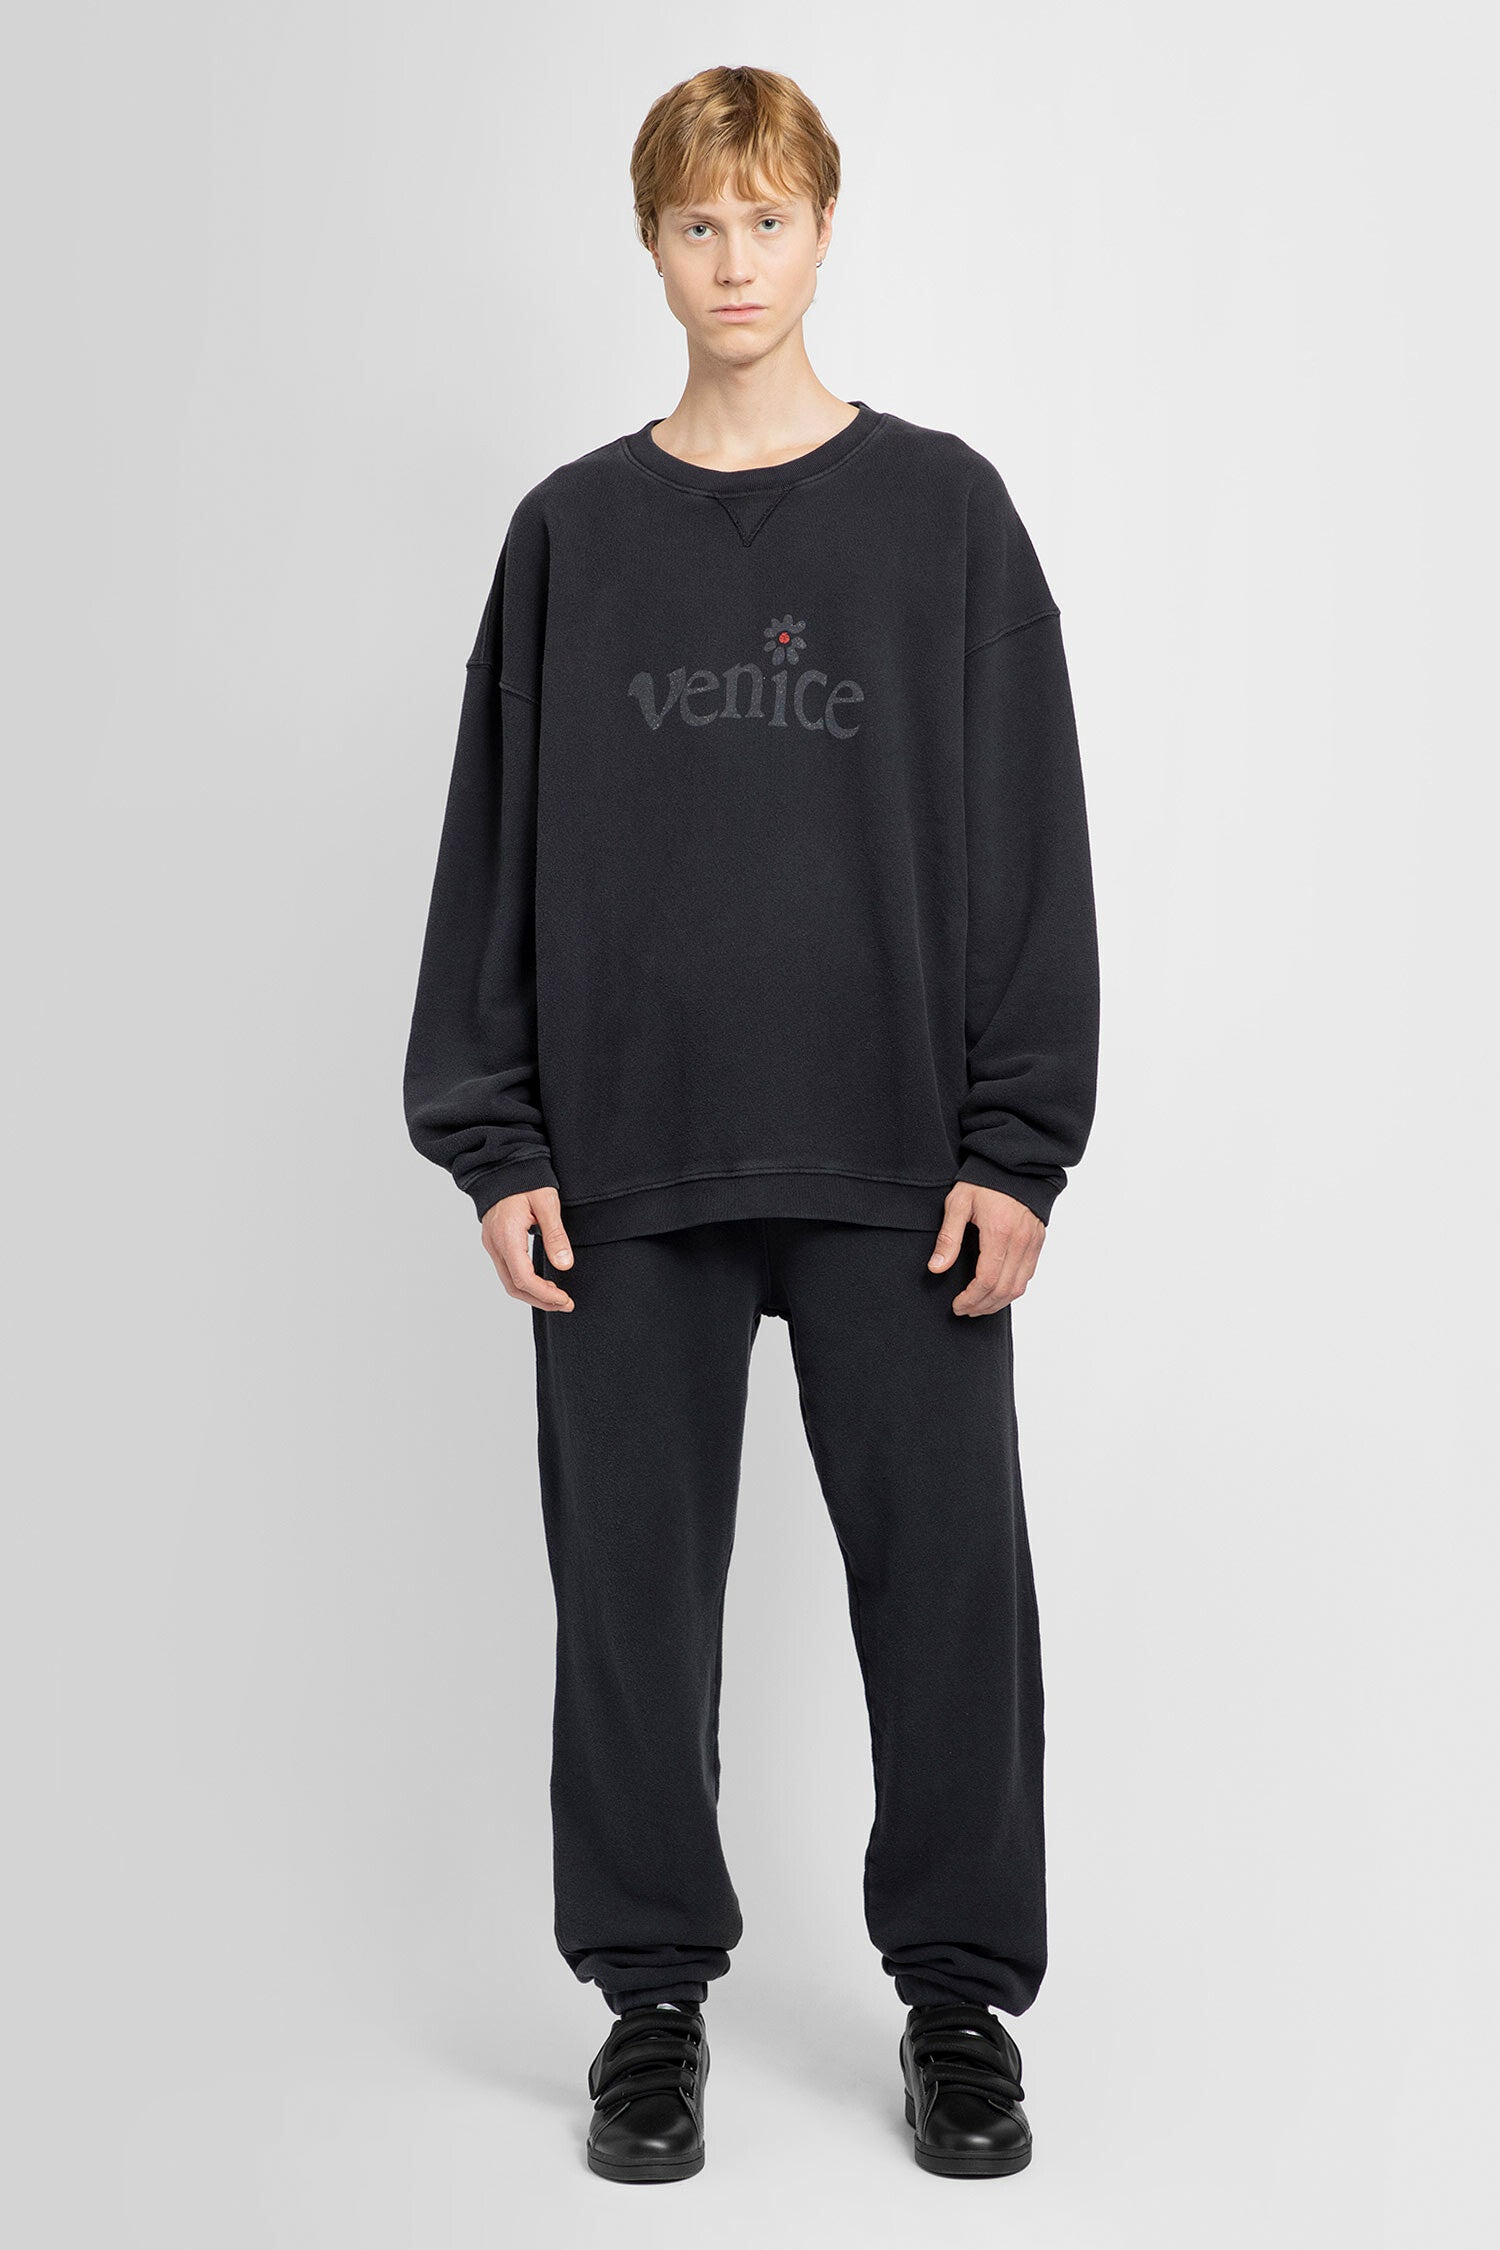 ERL Men's Venice Hooded Sweatshirt in Black